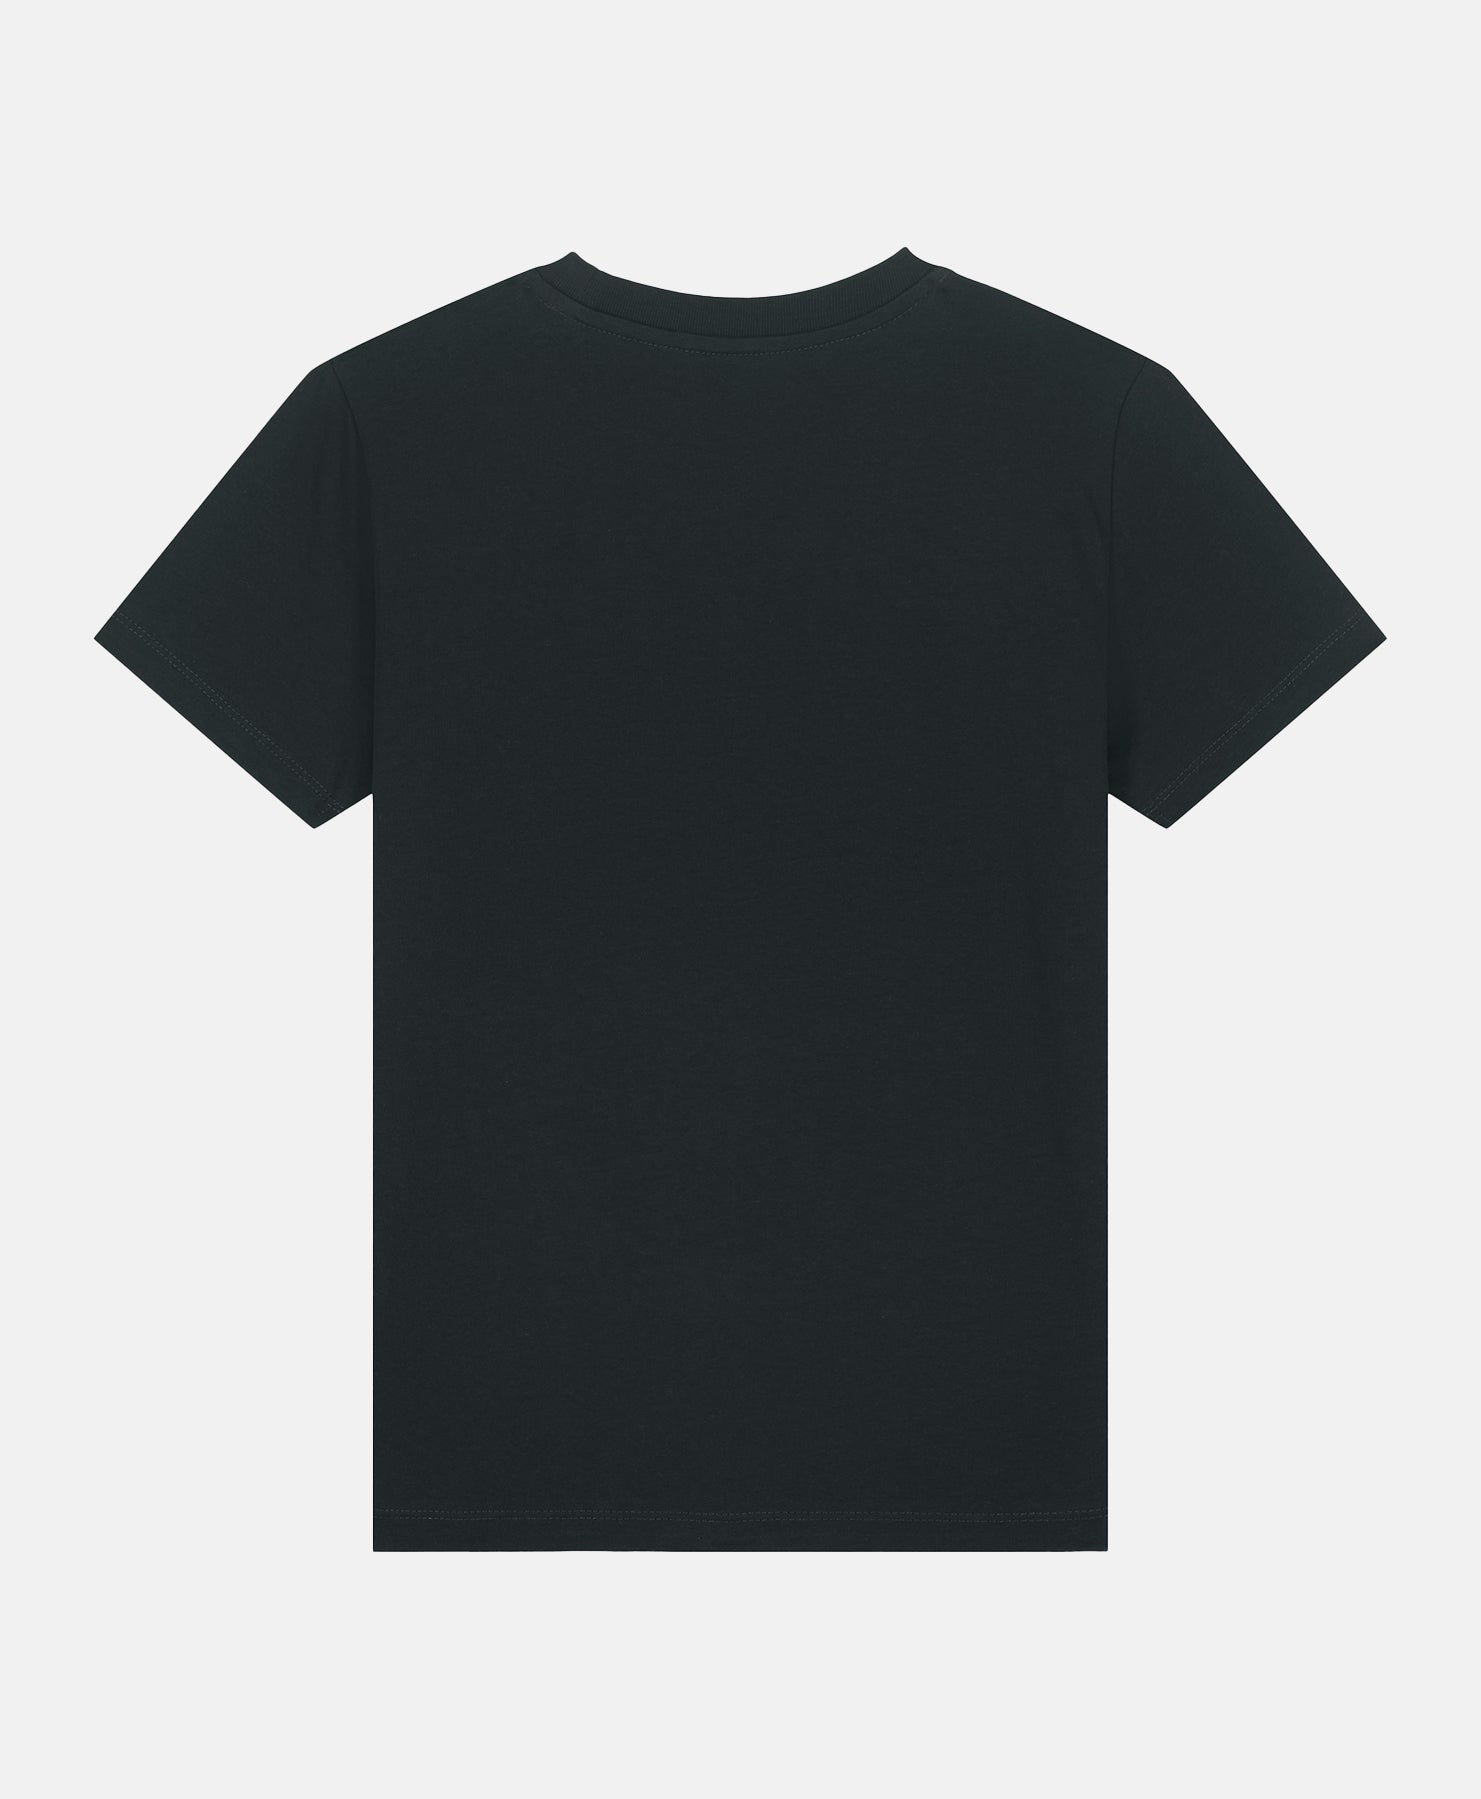 Dachshund T-Shirt Kids Black